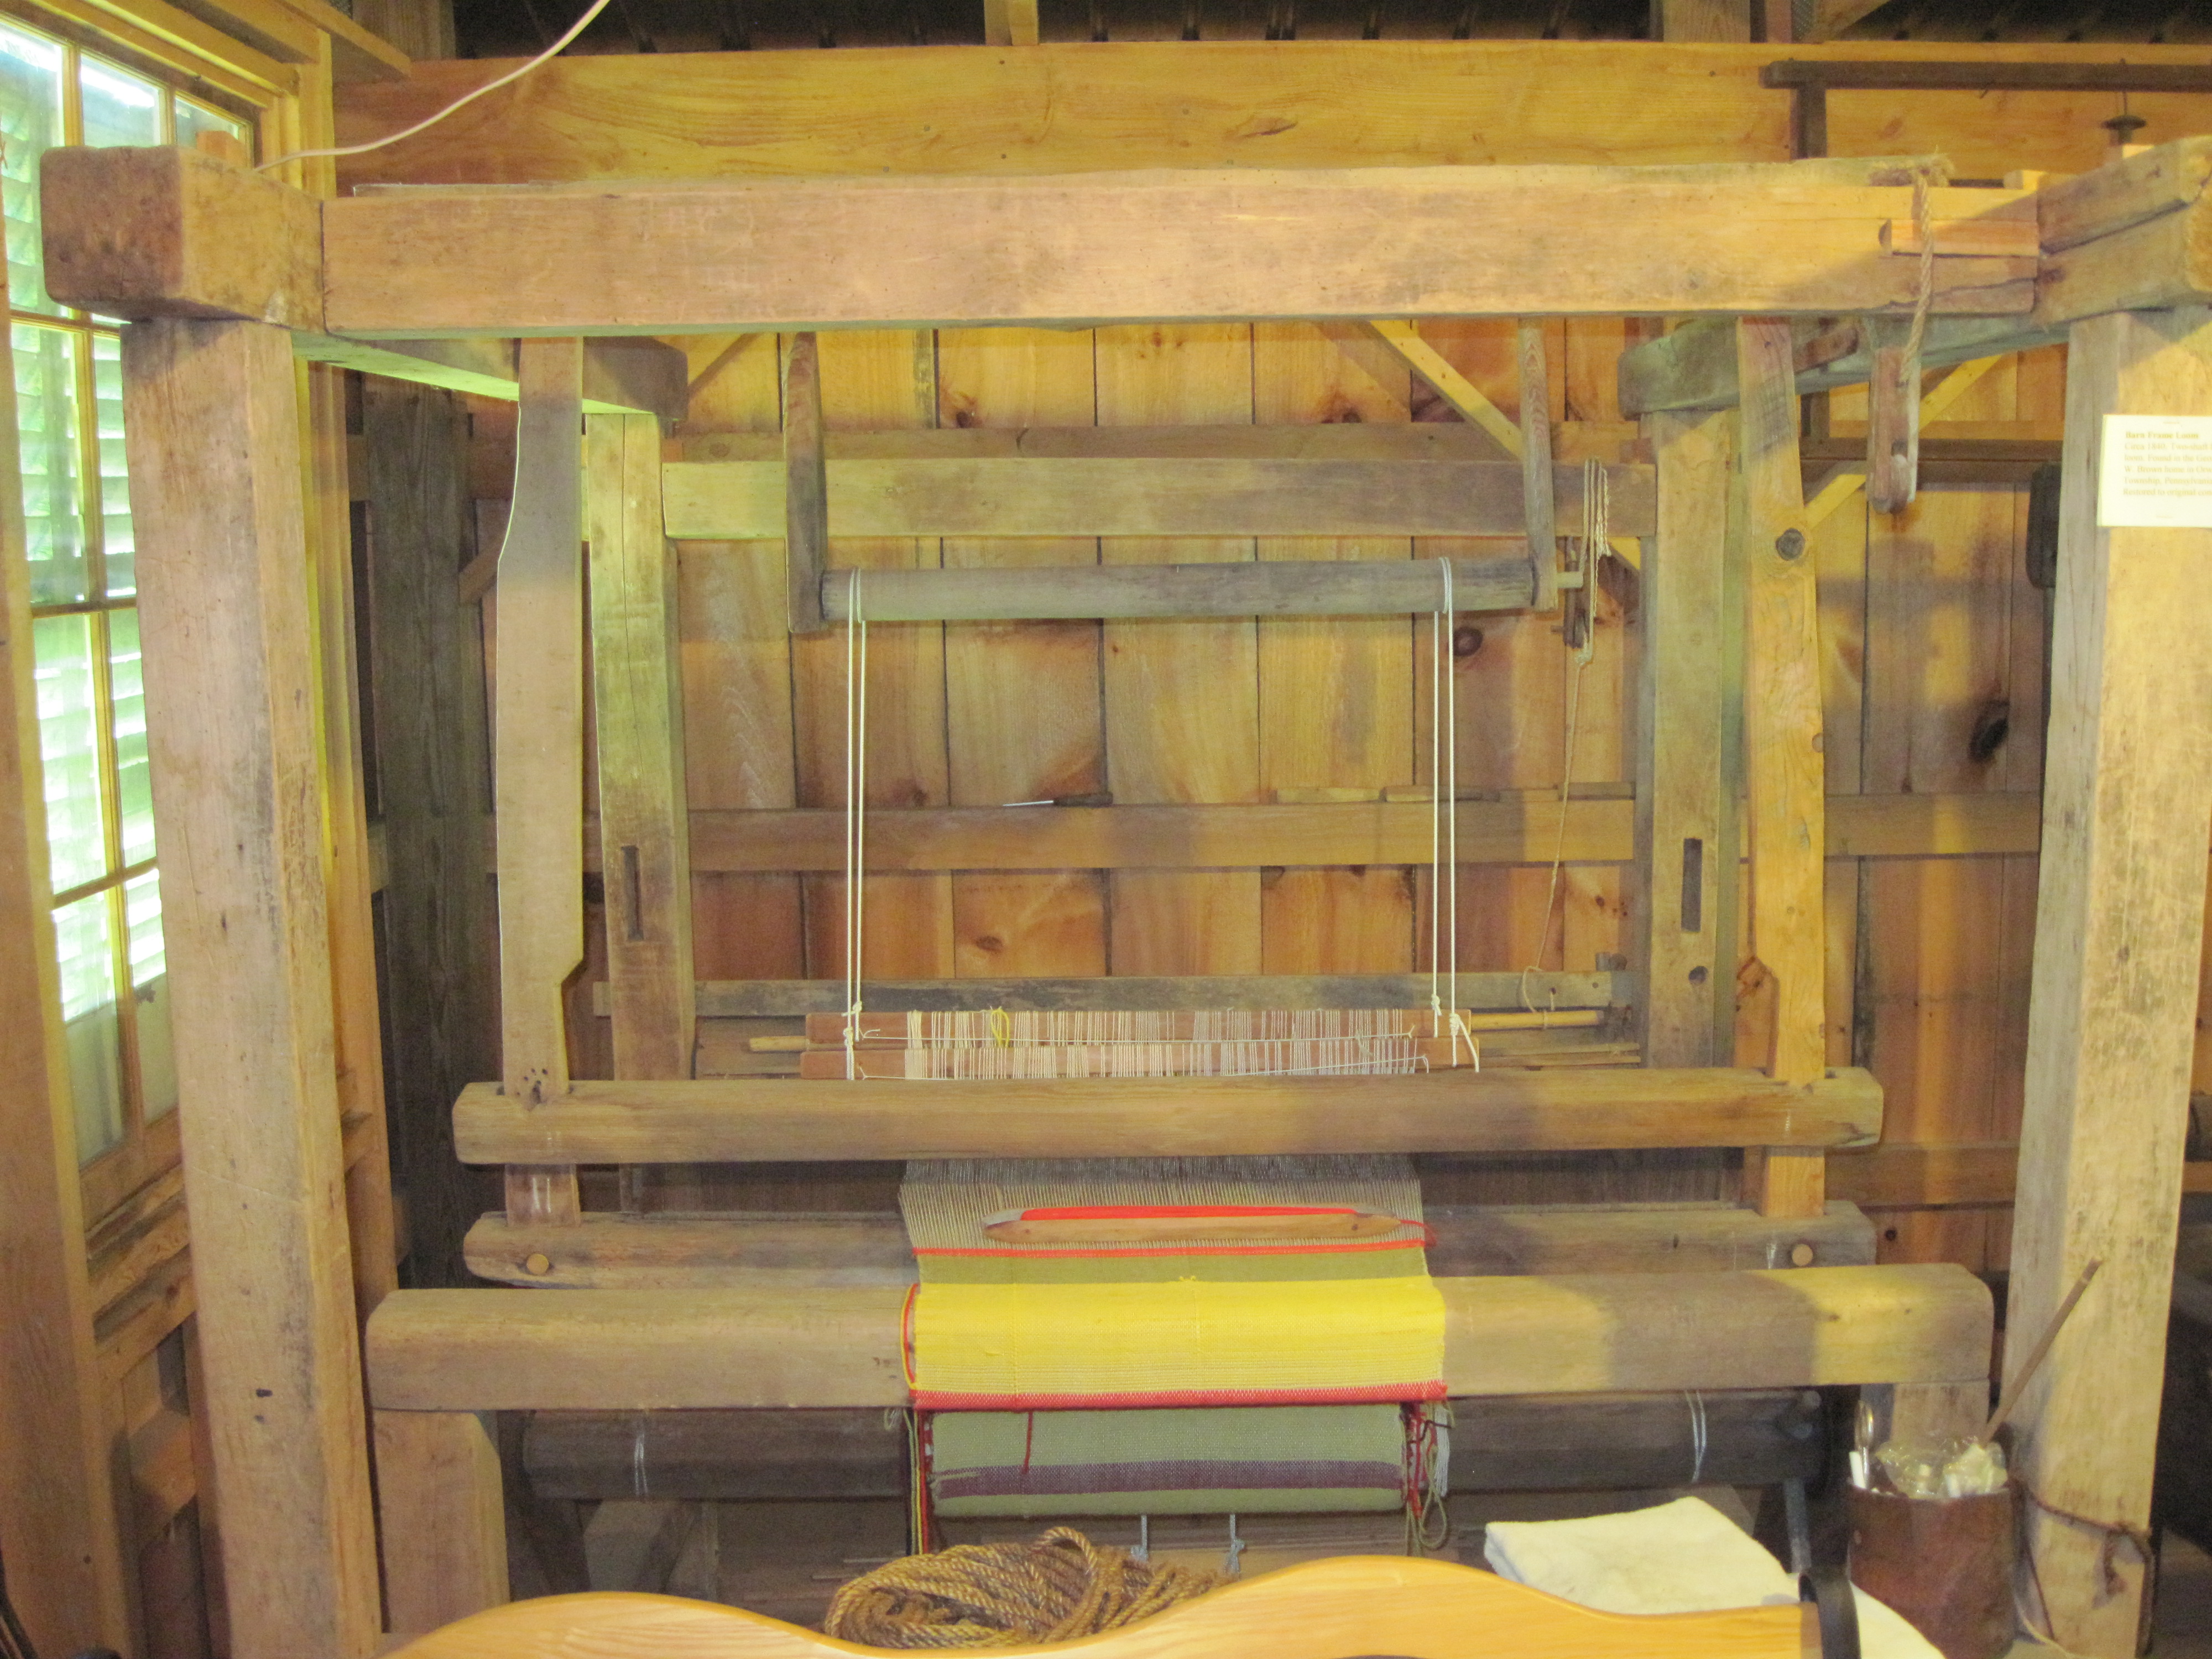 Museum Now has Operational Mini Loom